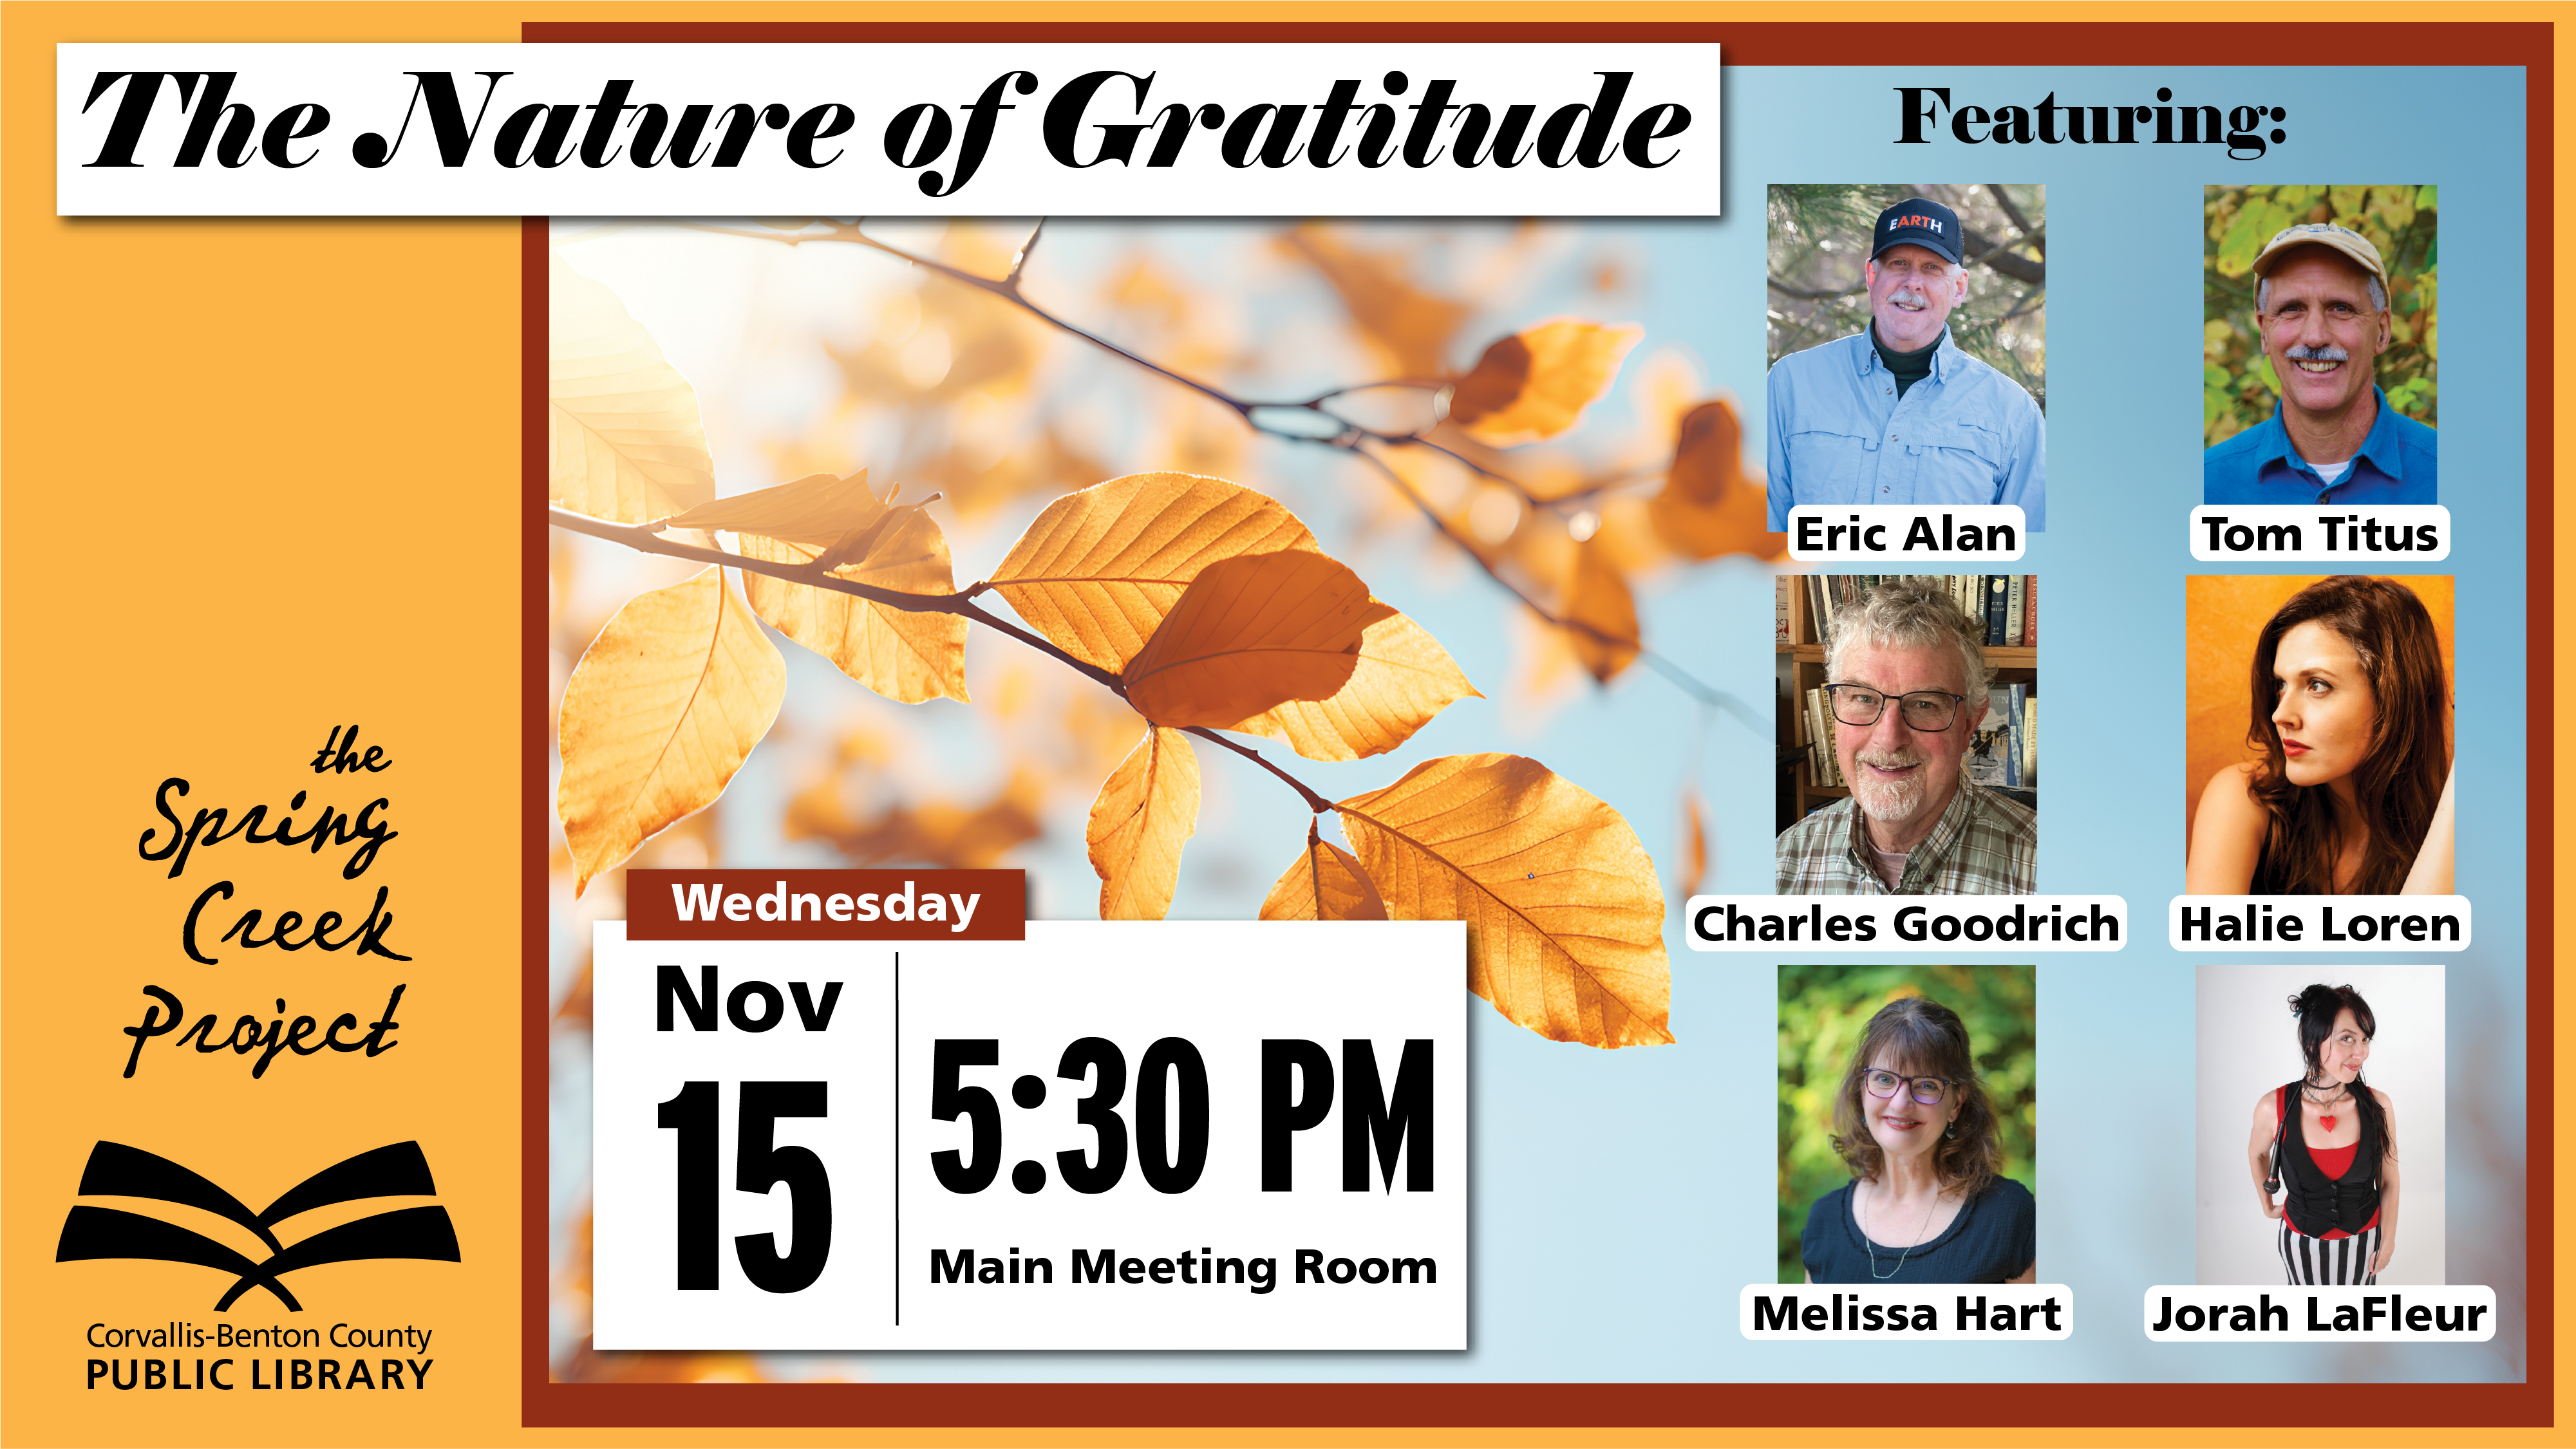 The Nature of Gratitude, November 15 at 5:30 PM